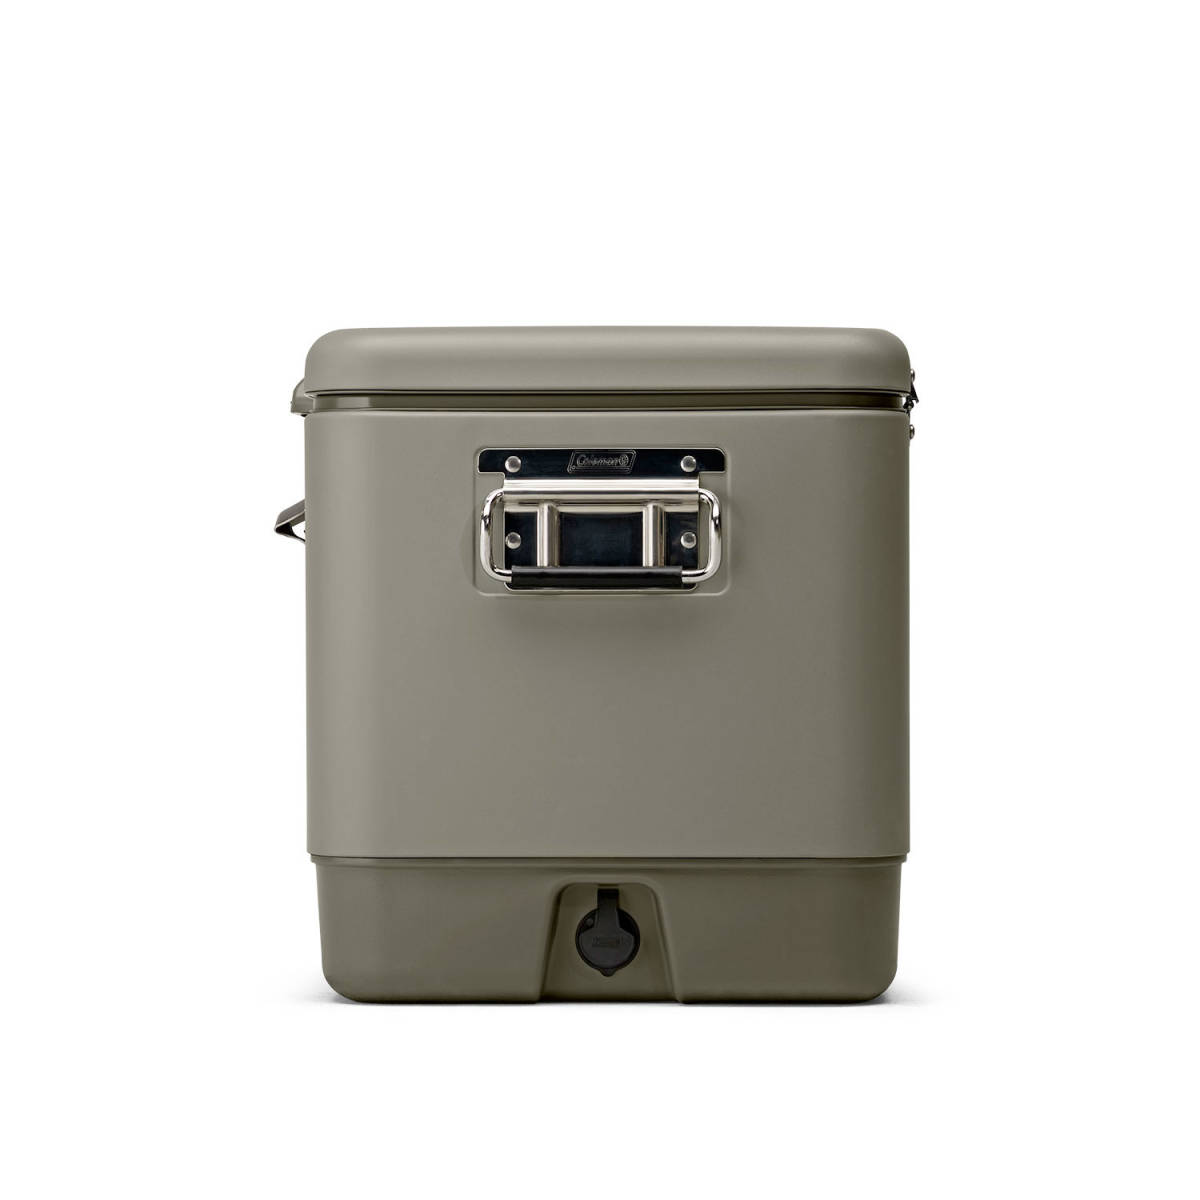 [ unused ] Coleman Coleman cooler-box keep cool seiji green 54QT steel belt R cooler,air conditioner 2159598 A-23 0076501170955